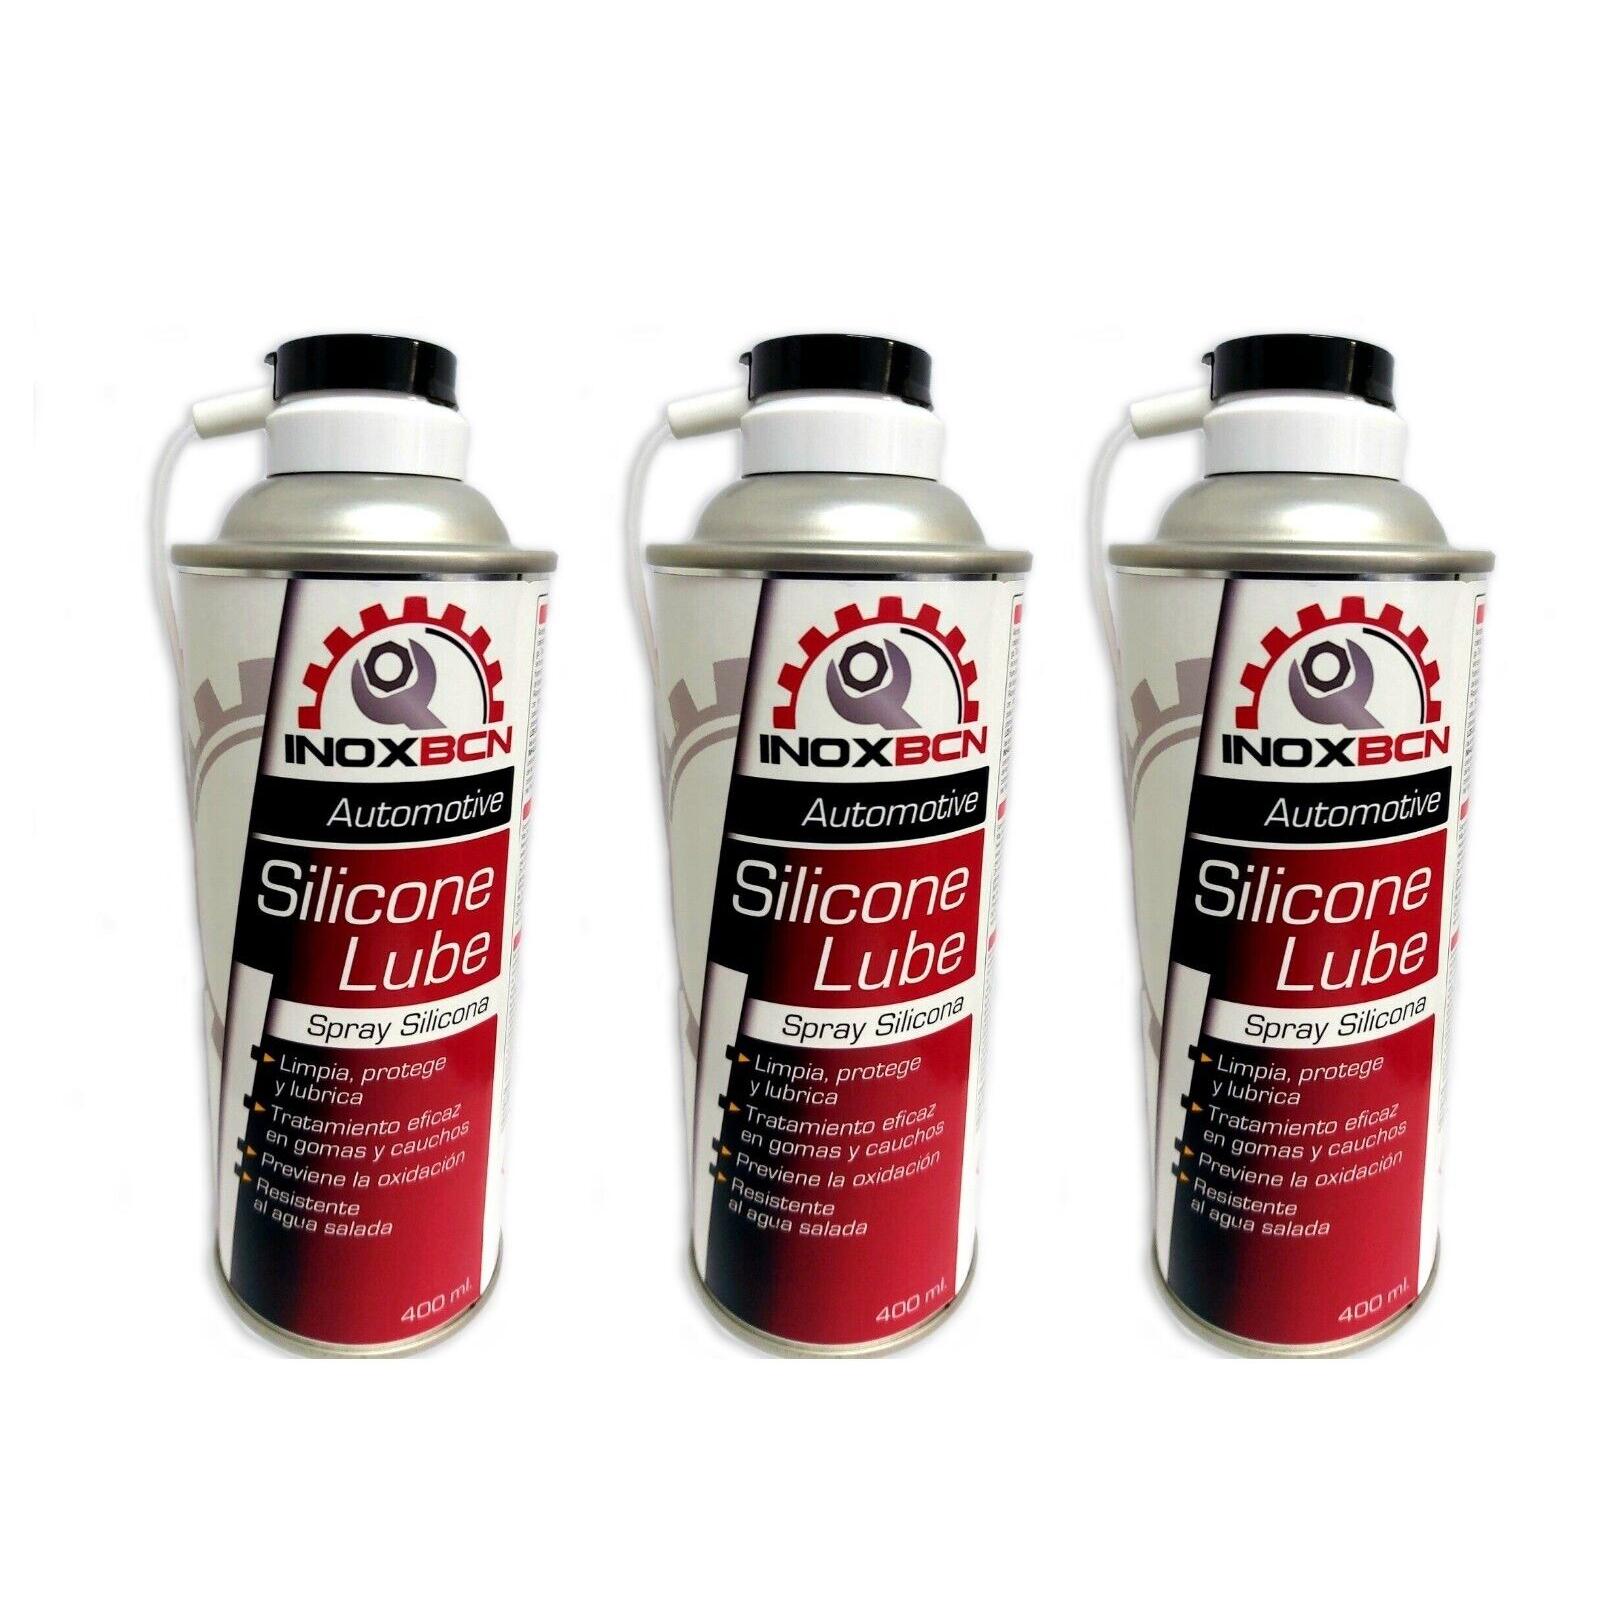 Inoxbcn Pack 3 spray pintura anticalorica 800º c negro 400ml - Inoxbcn